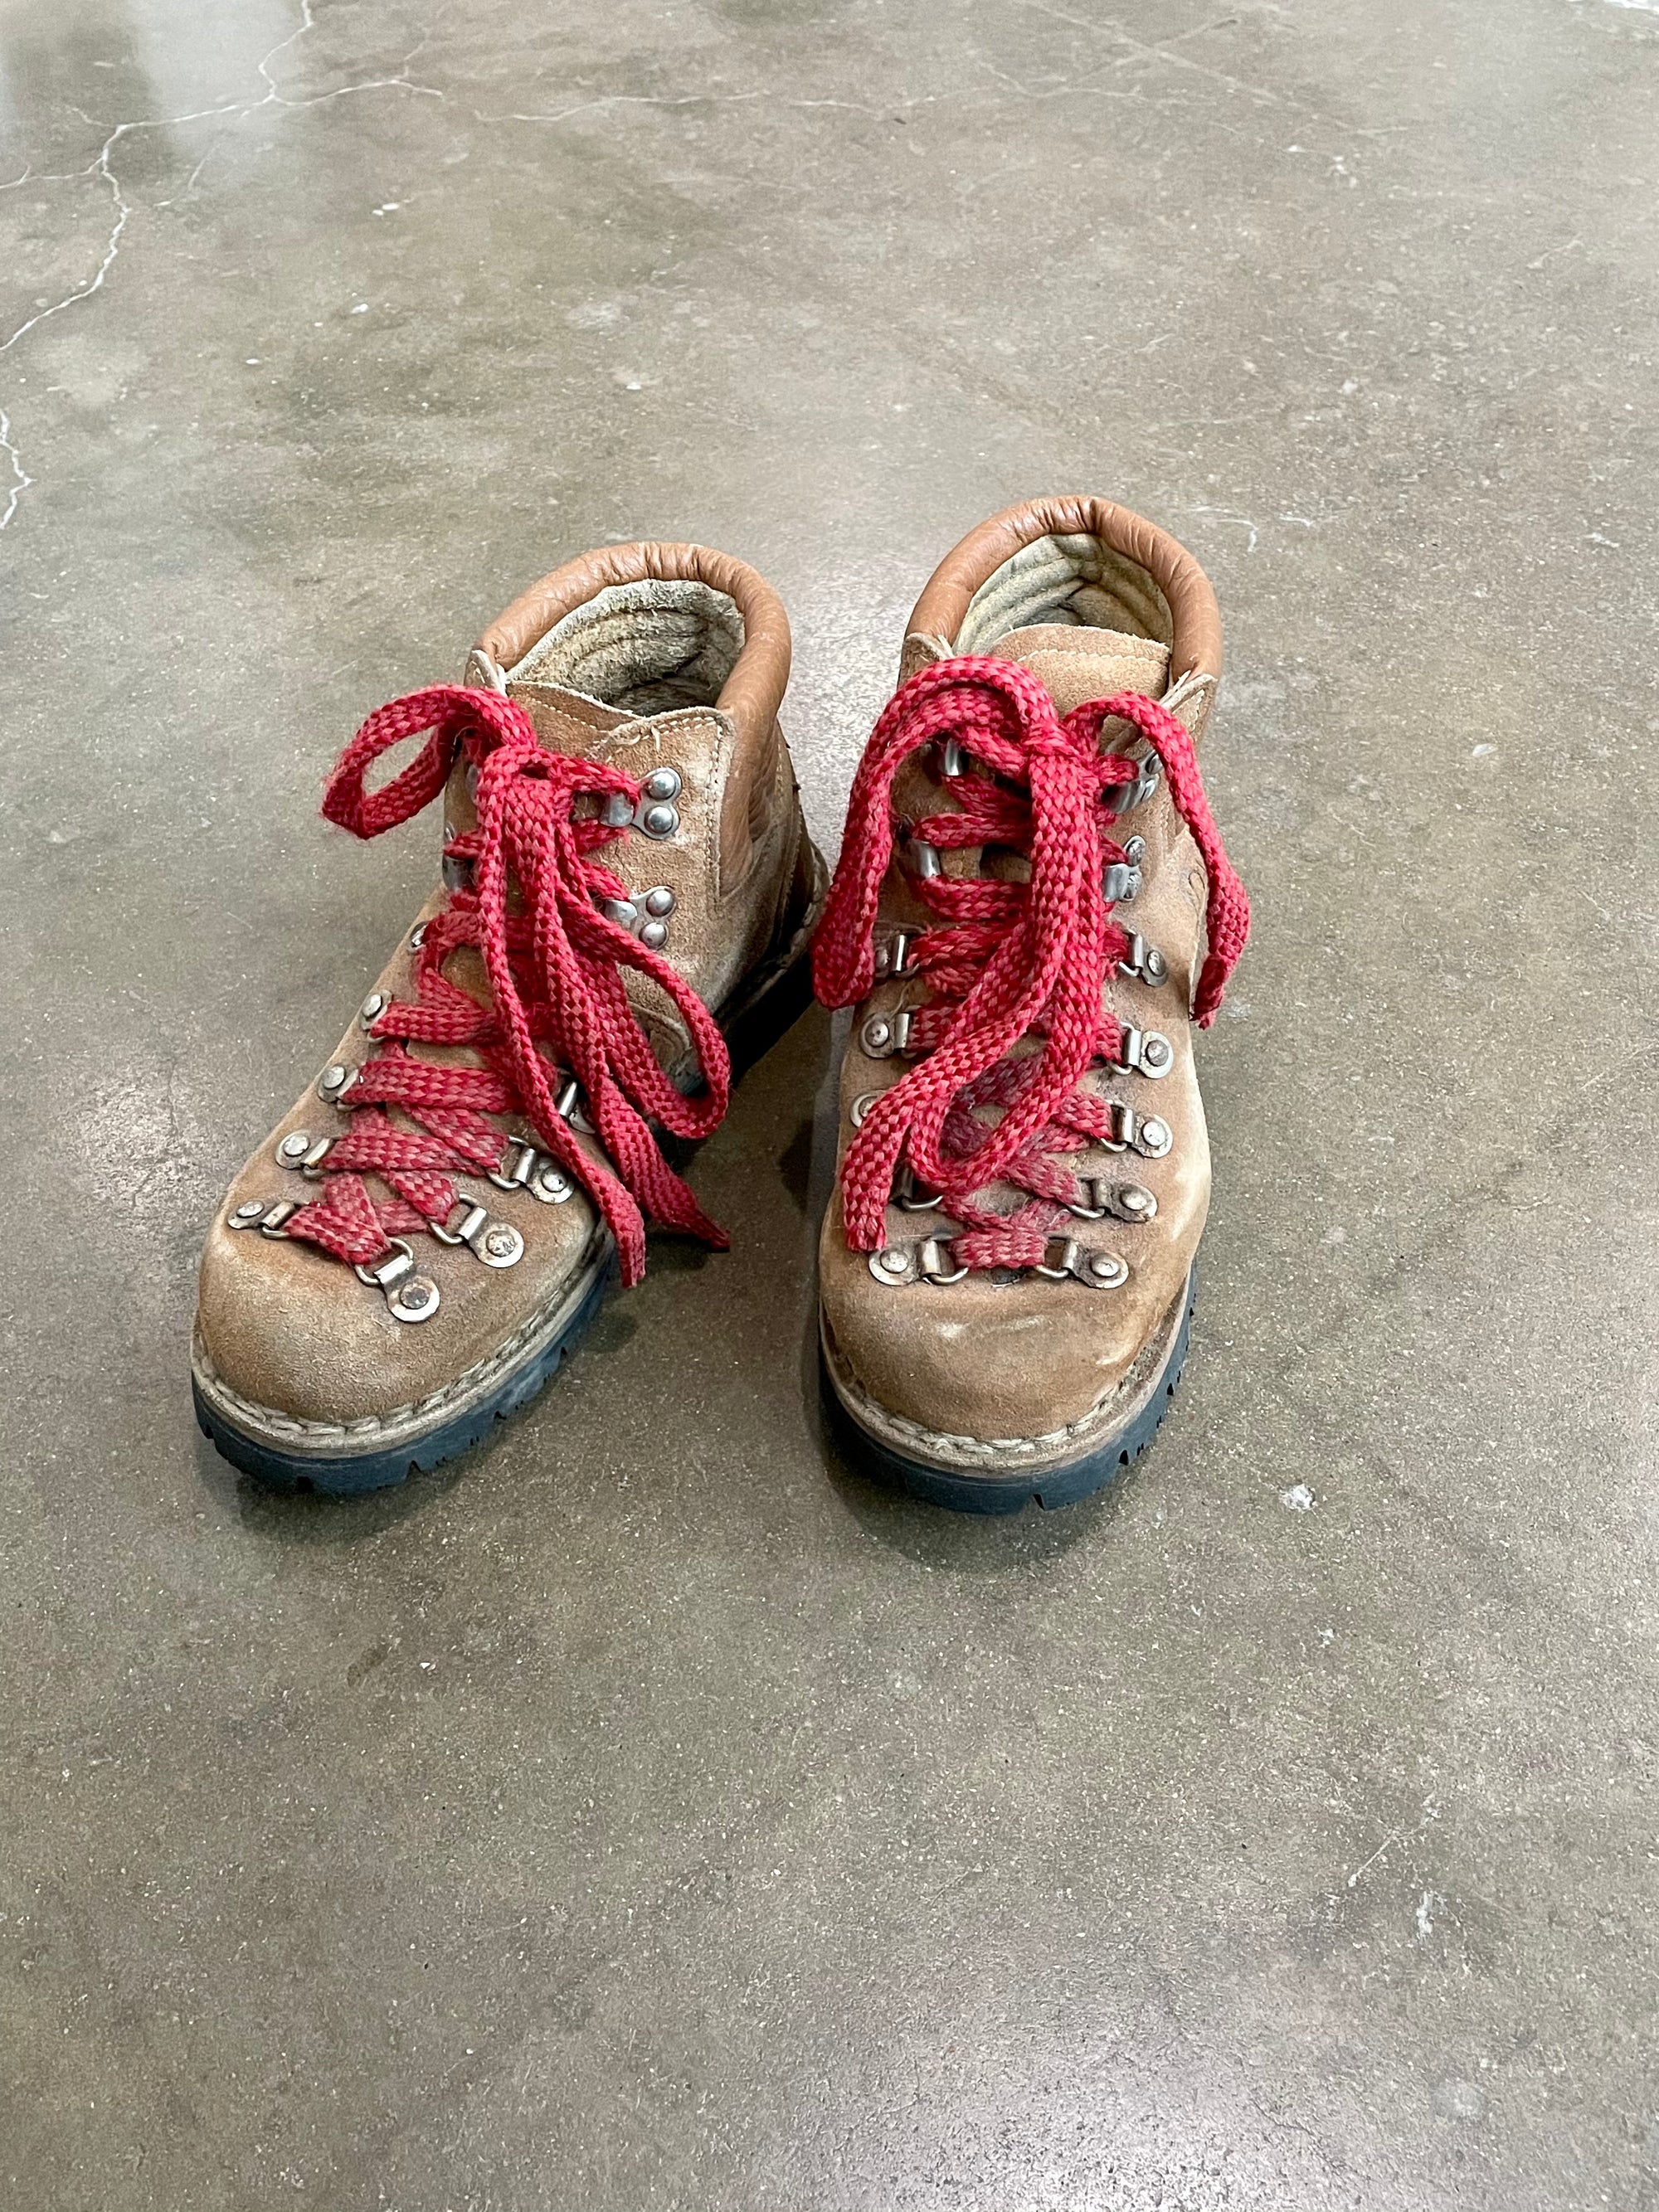 Vintage Vibram Hiking Boots